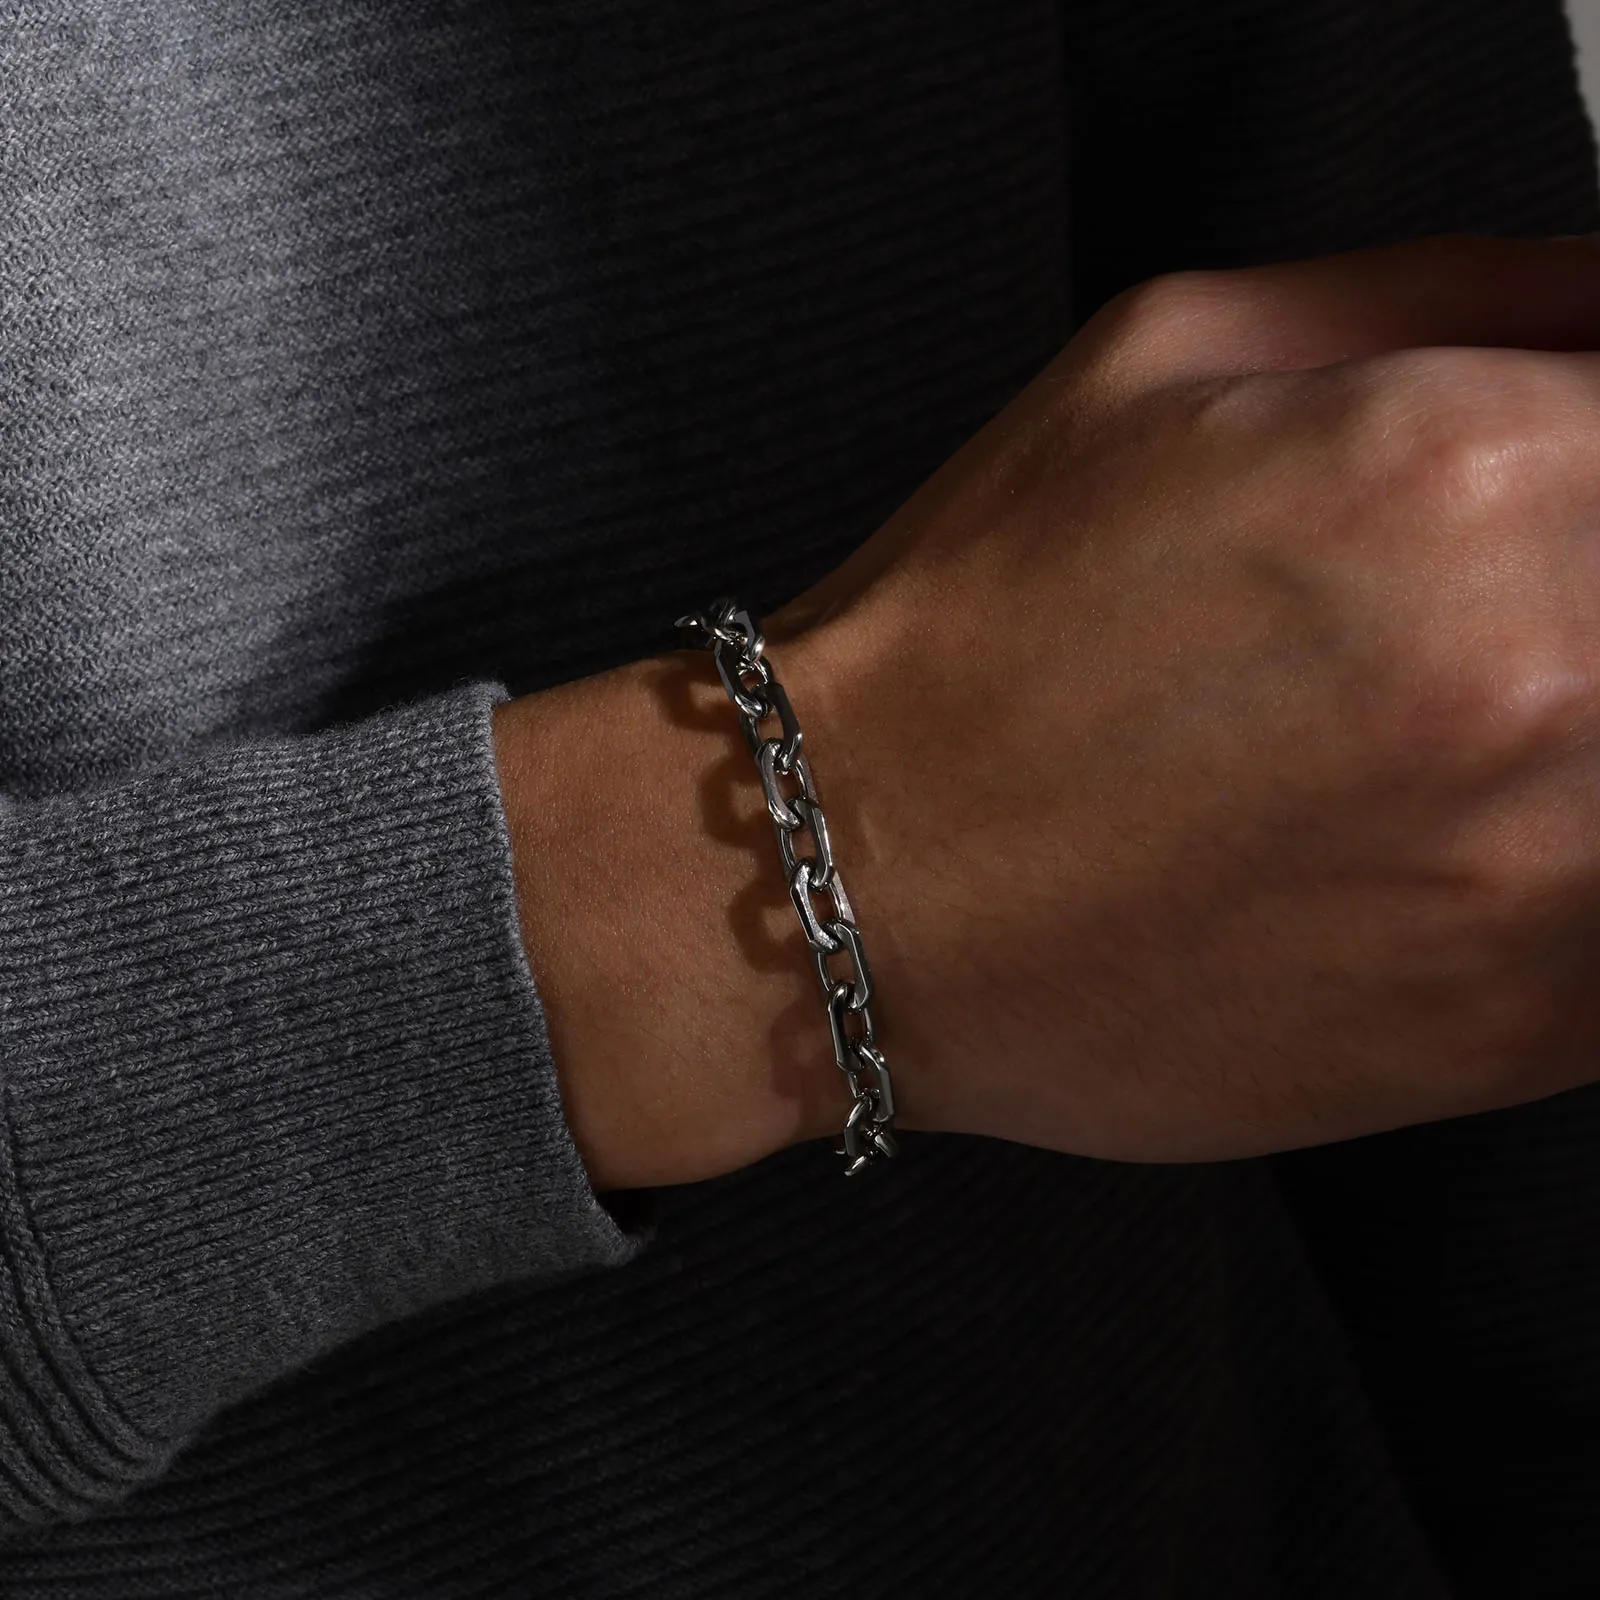 Vnox New Style 6.5MM Belcher Chain Bracelets for Men,Stainless Steel Square Geometric Links Wristband Gift,pulseira masculina